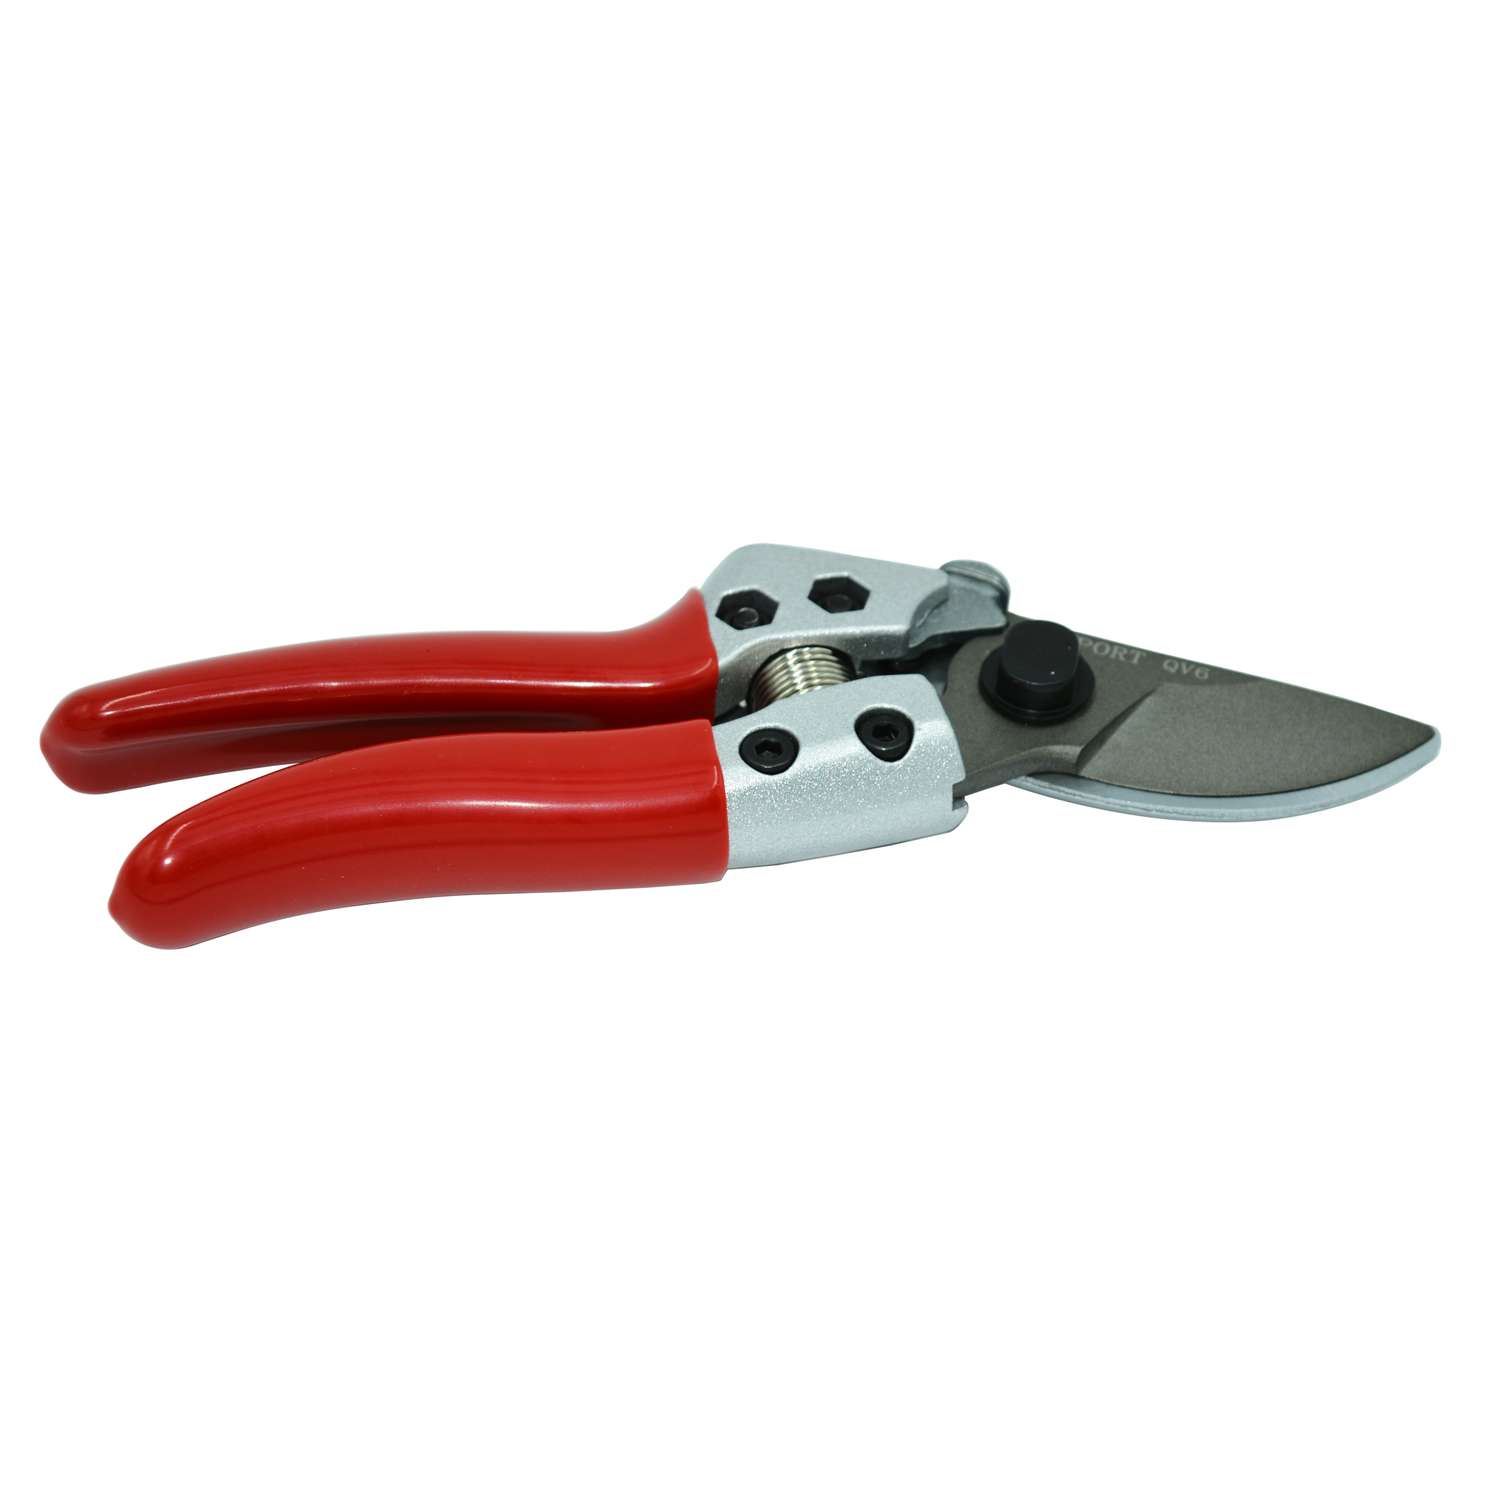 Zenport Red & White Garden Craft Scissors